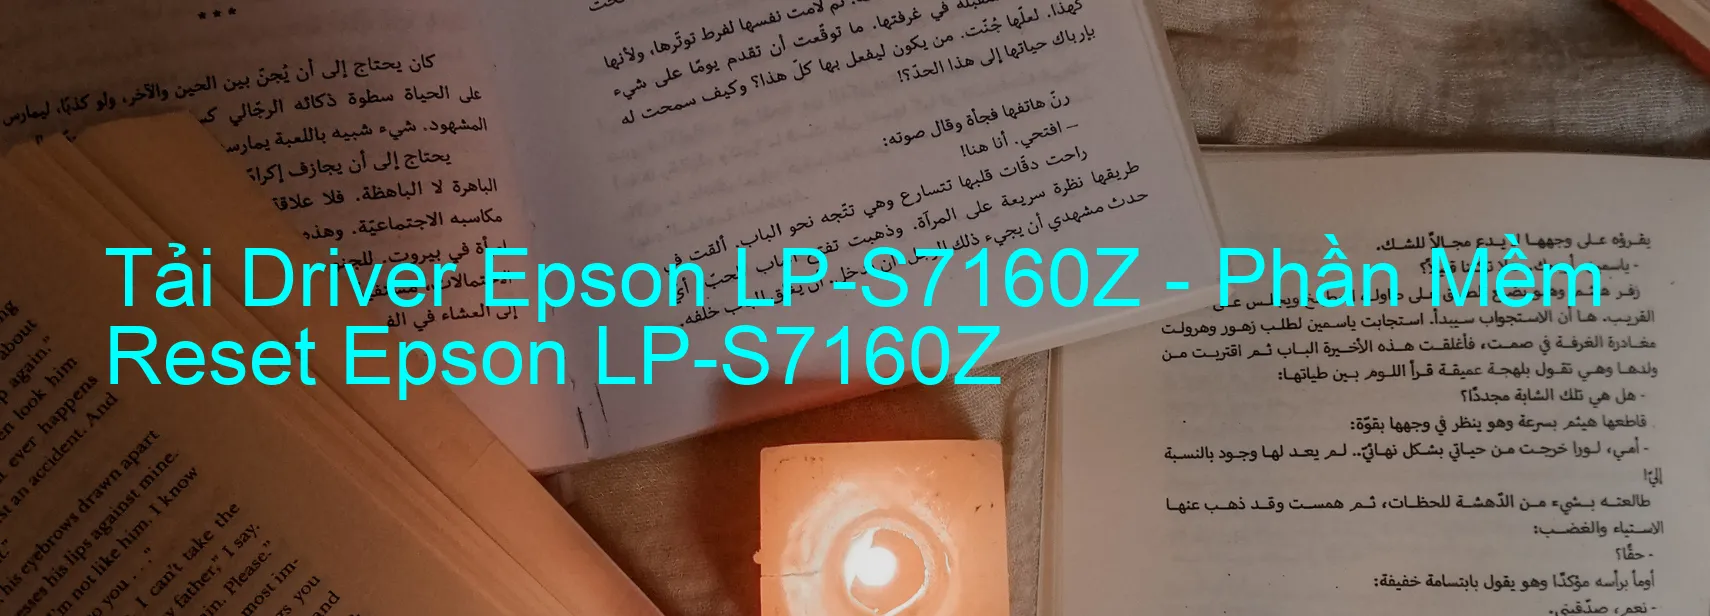 Driver Epson LP-S7160Z, Phần Mềm Reset Epson LP-S7160Z